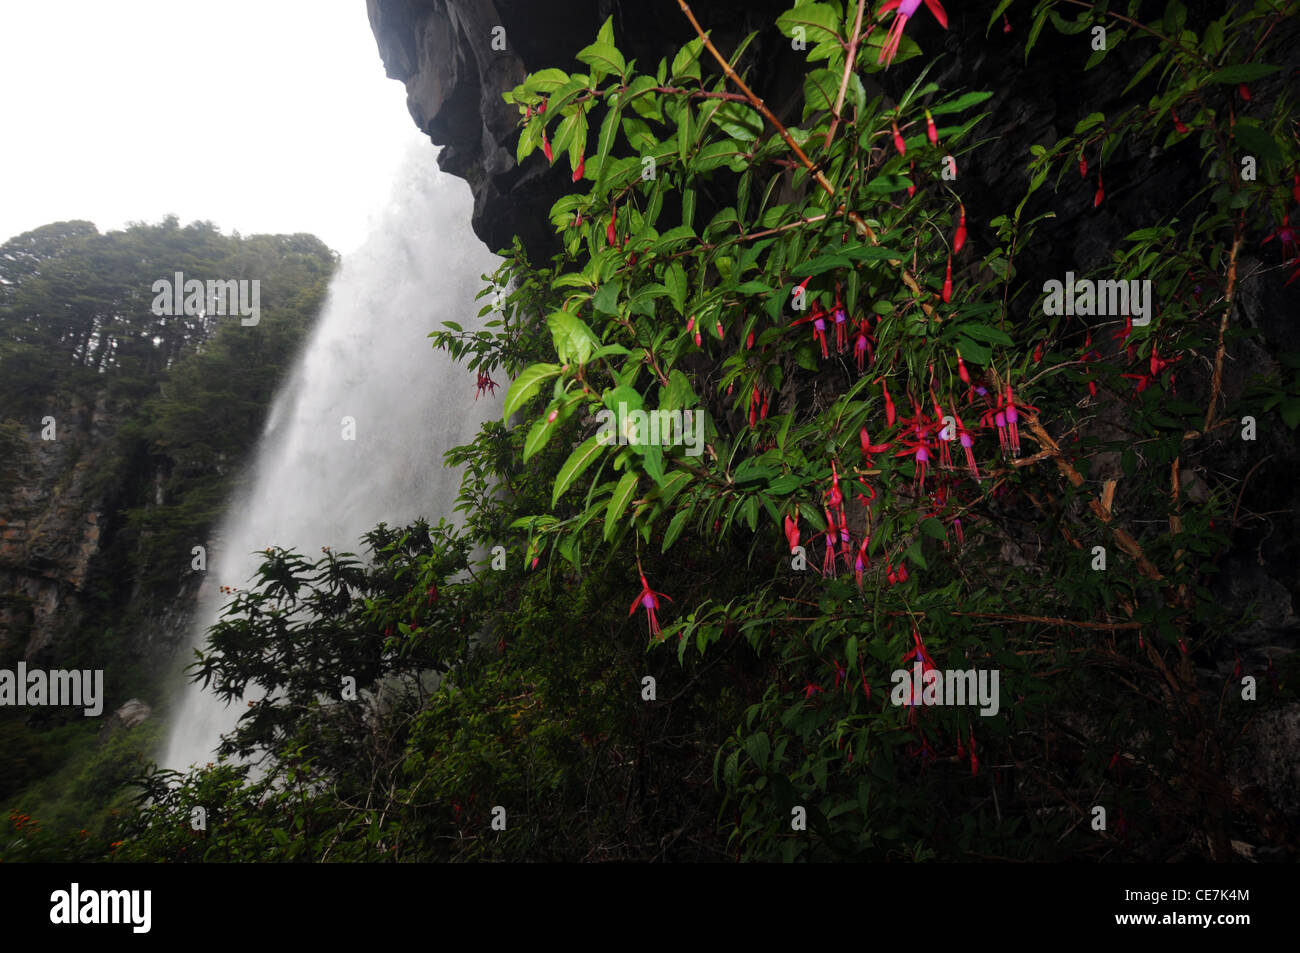 Fuschia magellanicus flowering at El Saltillo waterfall, Parque Nacional Lanin, Neuquen, Argentina Stock Photo